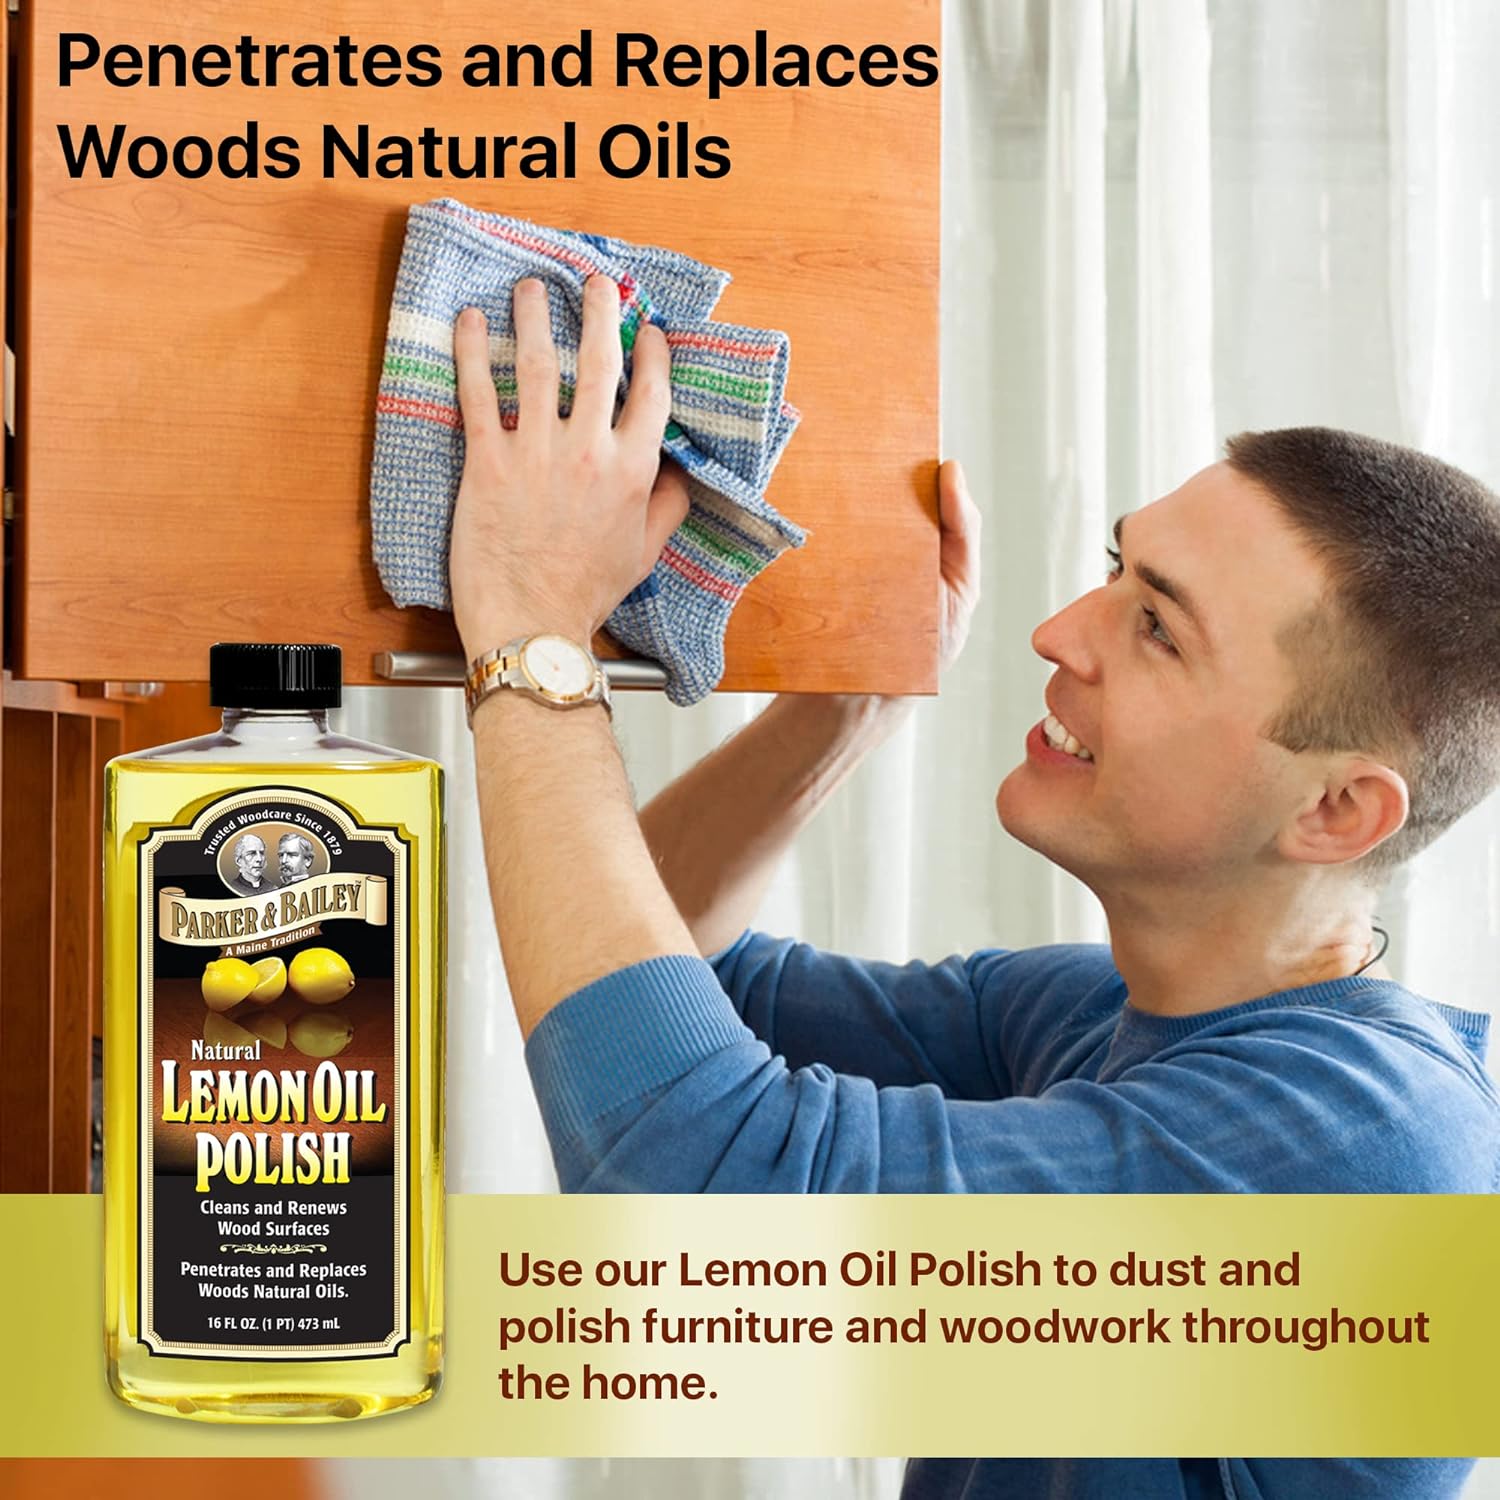 PARKER & BAILEY LEMON OIL POLISH - Natural Lemon Scented Wood Cleaner & Furniture Polish, Cleans, Renews, Restores & Rejuvenates Wood Surfaces, 16oz : Health & Household